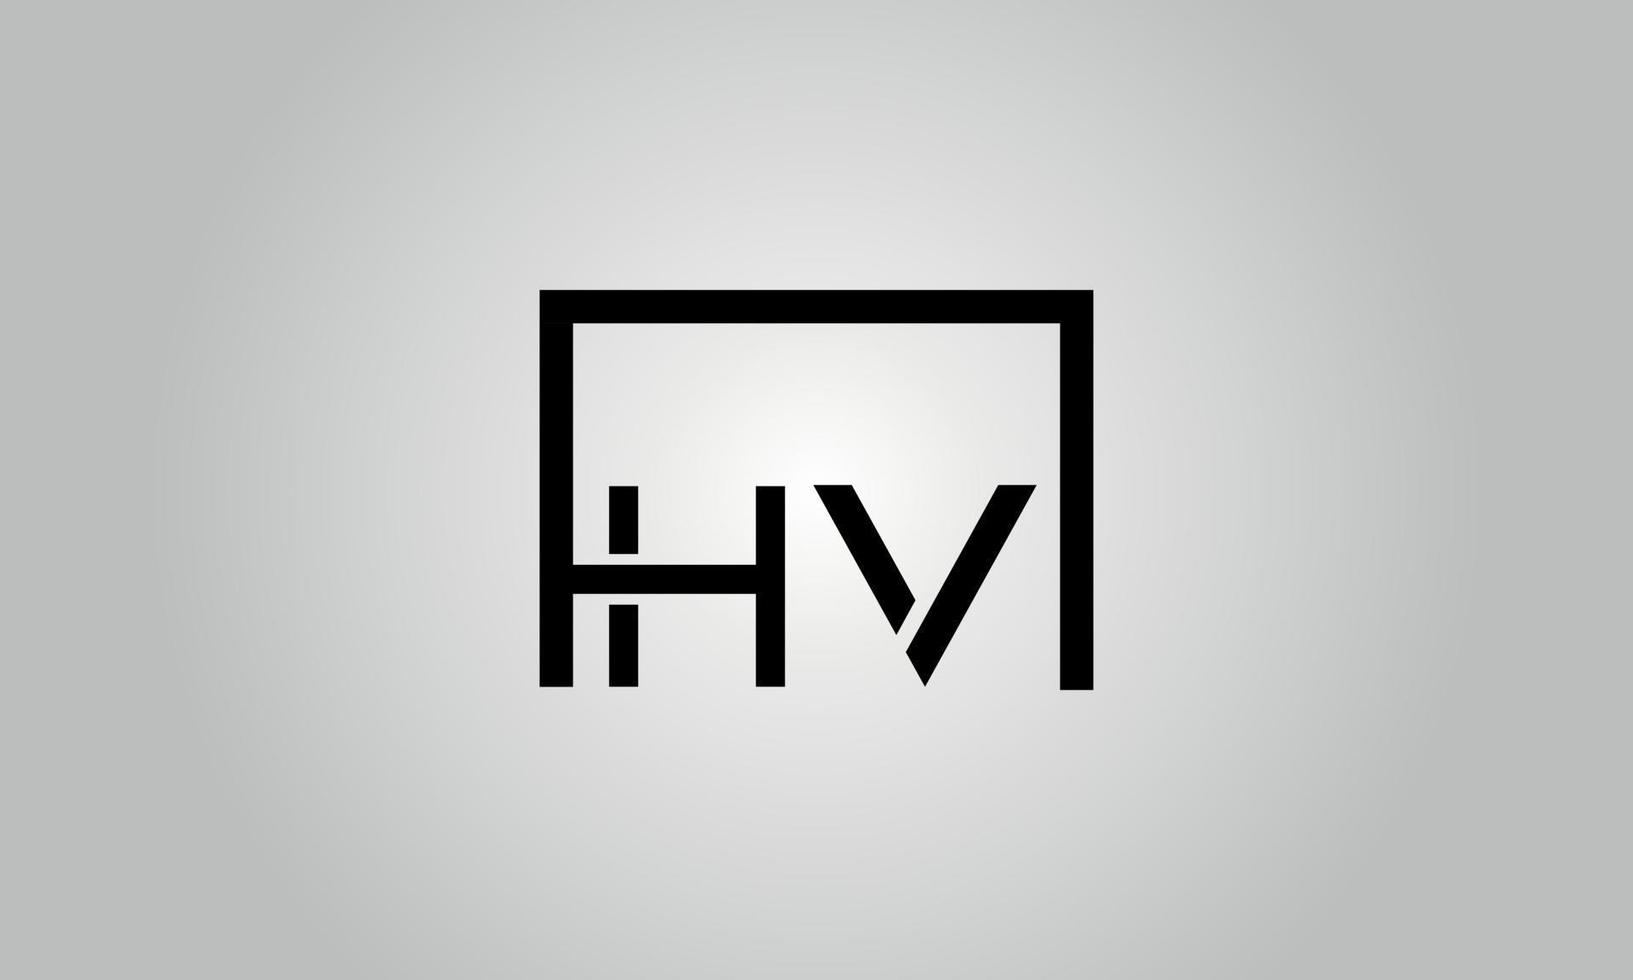 Letter HV logo design. HV logo with square shape in black colors vector free vector template.